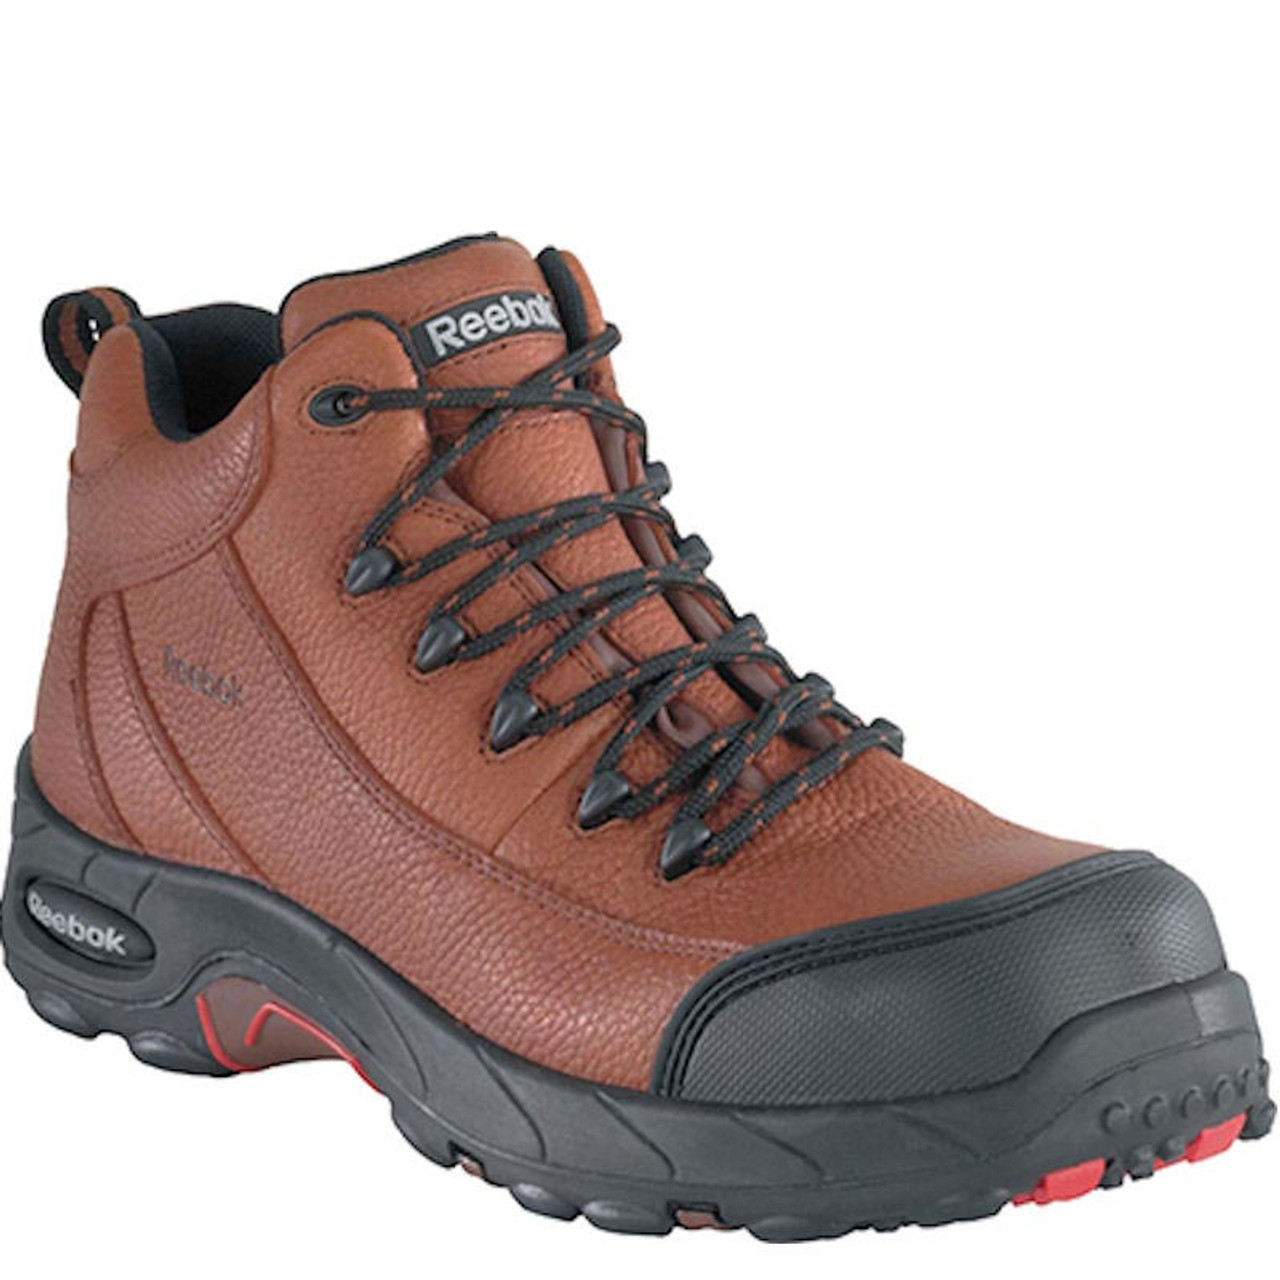 reebok composite toe hiking boots